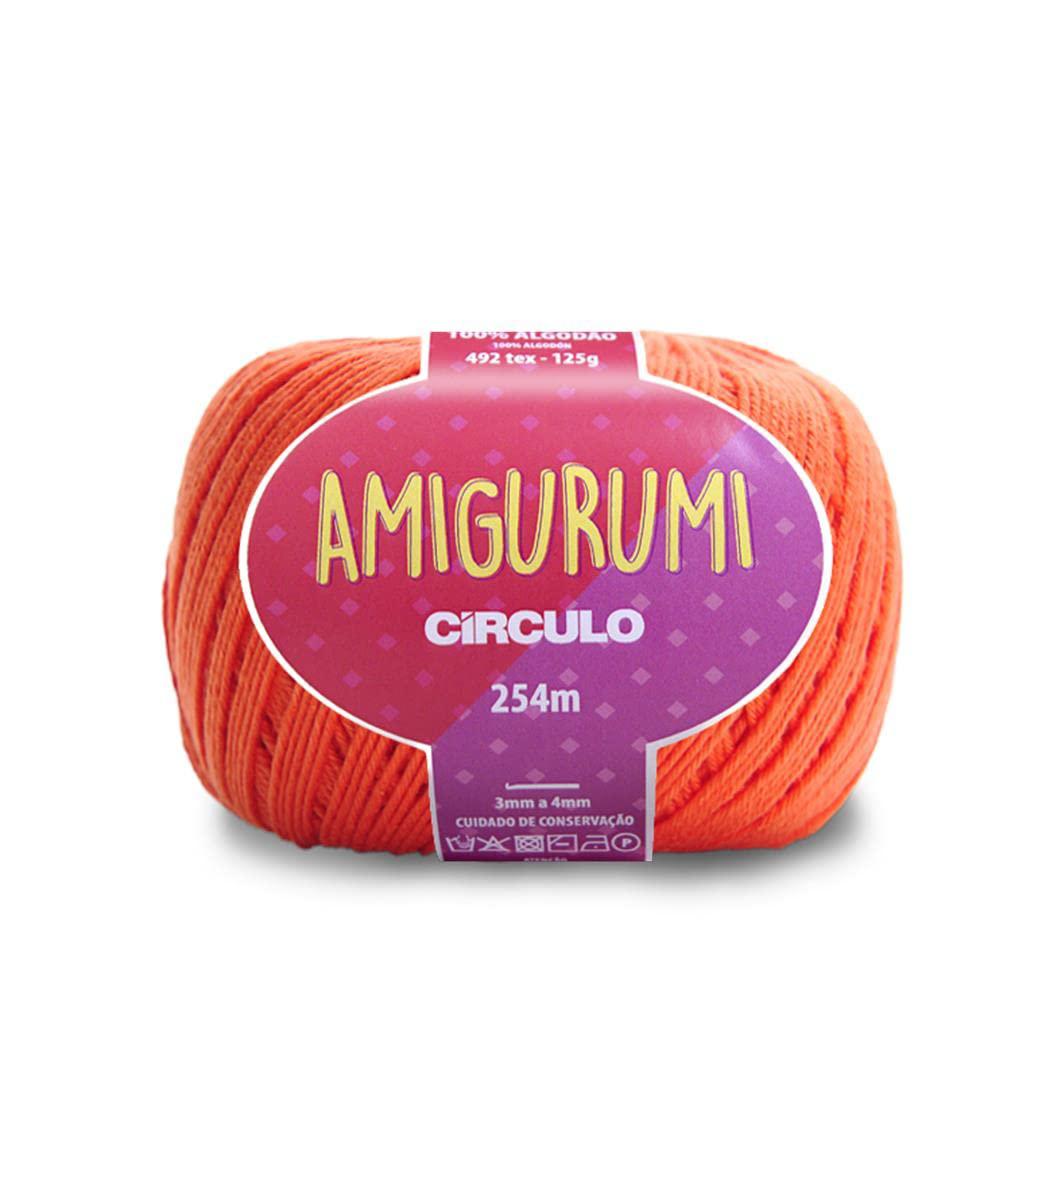 Crculo amigurumi yarn by circulo - 100% mercerized brazilian virgin cotton (pack of 1 ball) - 4.4 oz, 278 yds - sport (clay - 4448)